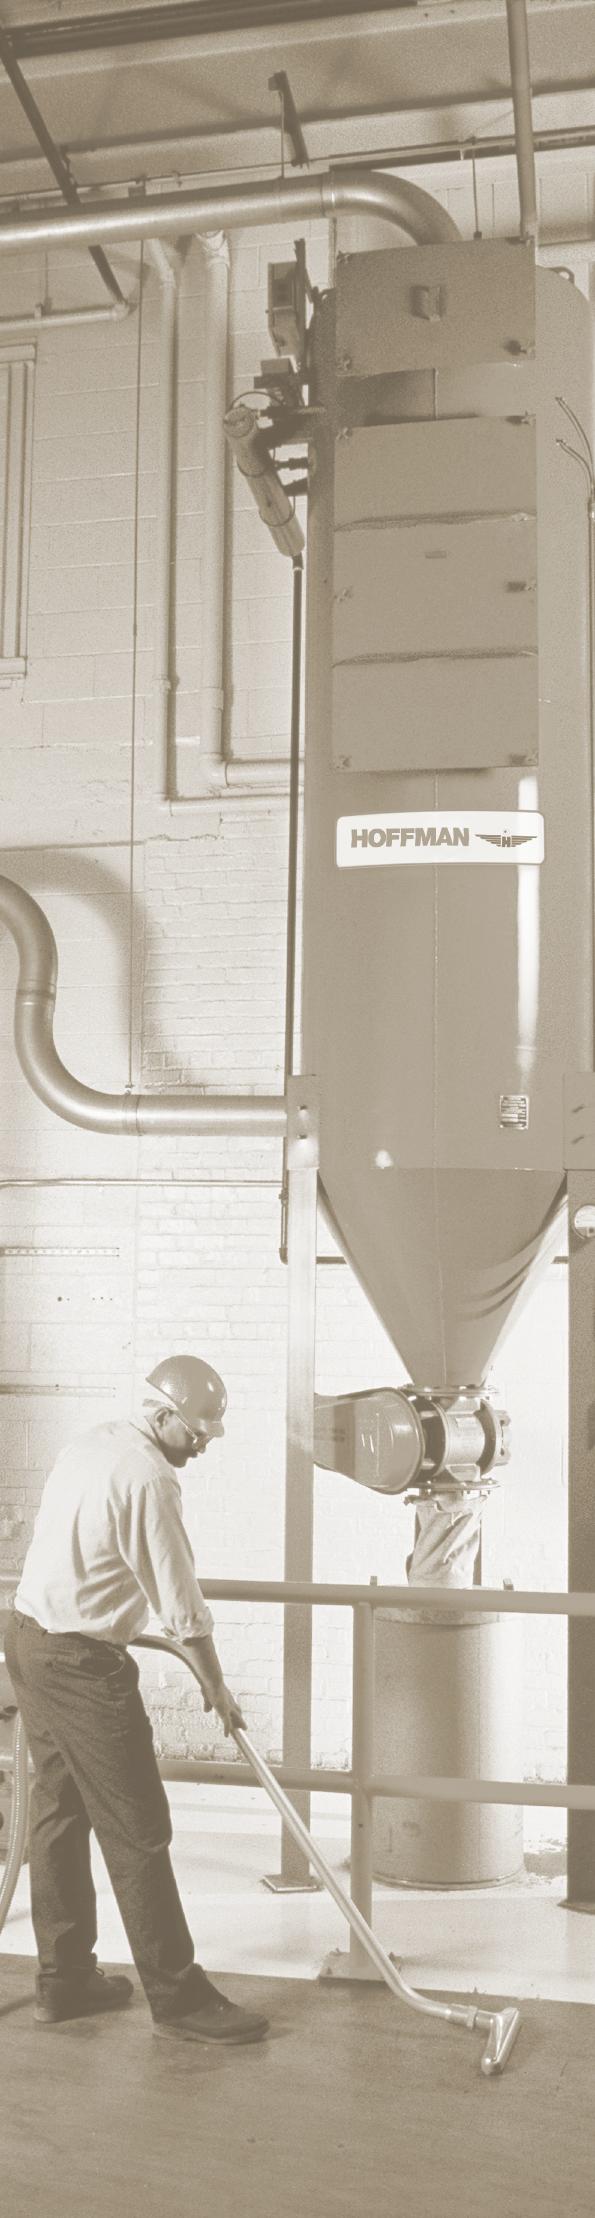 HOFFMAN & LAMSON ENGINEERED VACUUM SYSTEMS ENGINEERED VACUUM SYSTEMS FOR ENGINEERED INDUSTRIAL VACUUM SYSTEMS APPLICATIONS For Industrial Applications Anchored in tradition, the Hoffman & Lamson